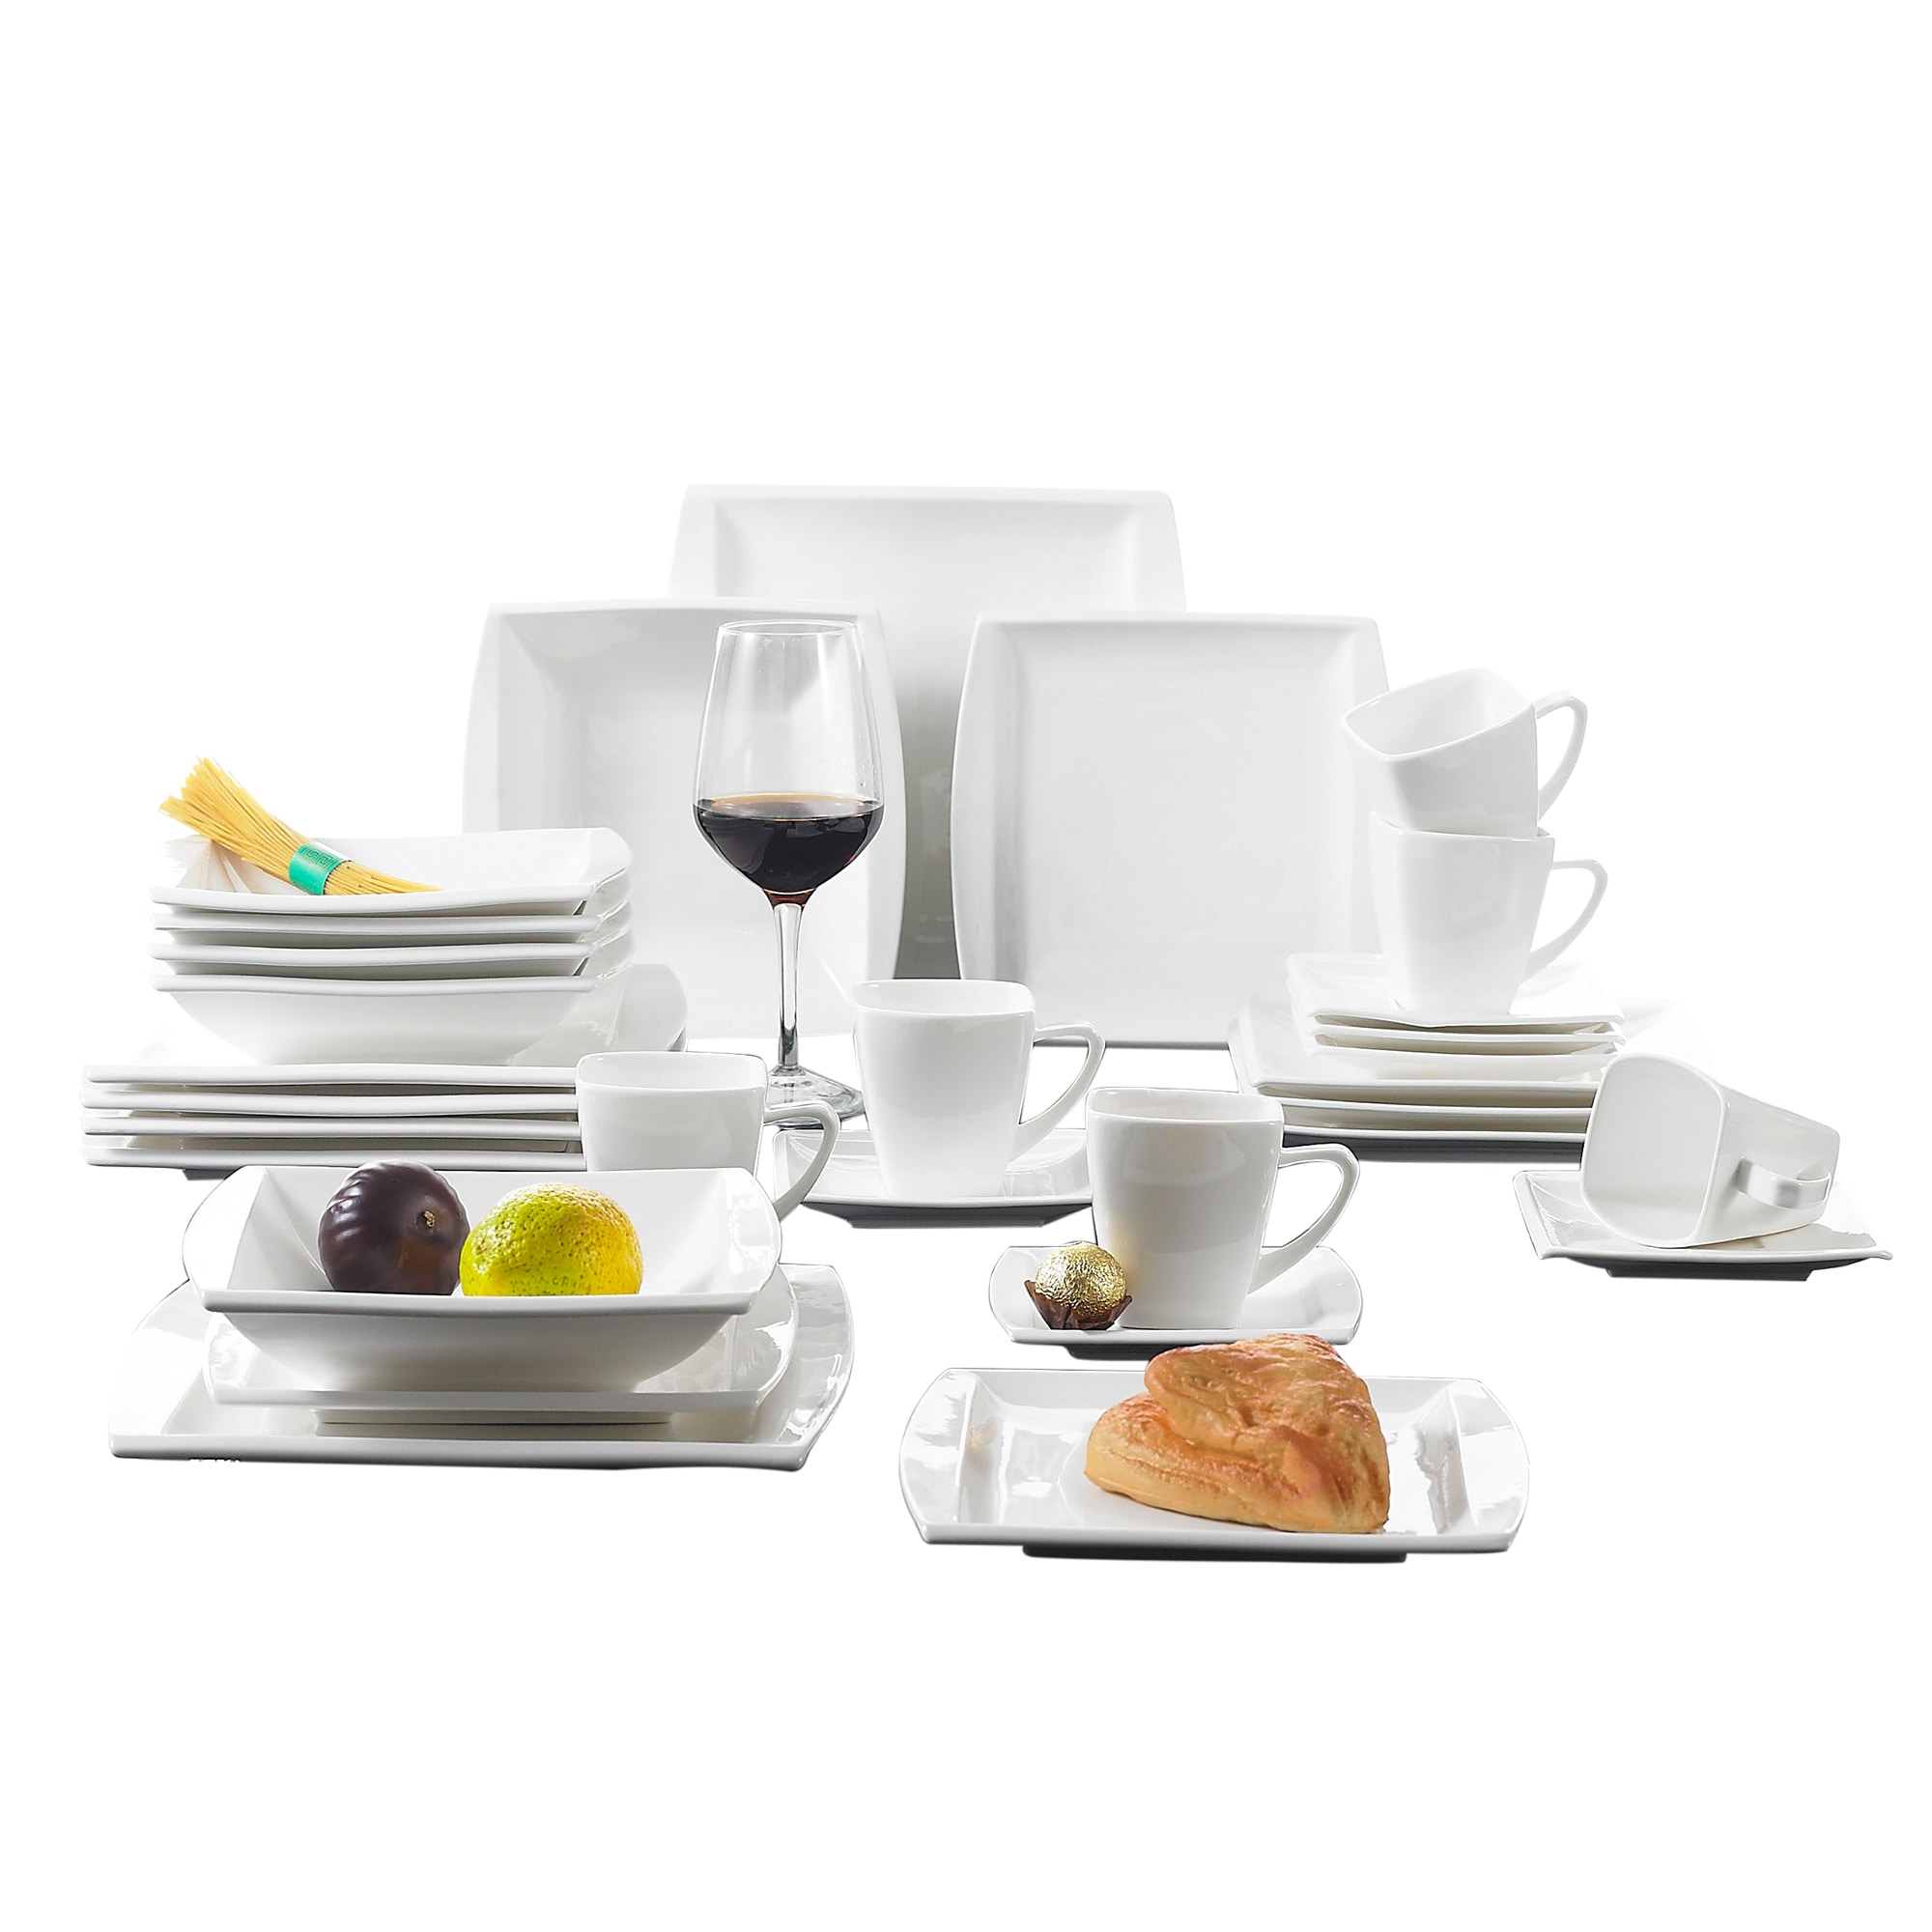 MALACASA Series Blance Porcelain Dinnerware Set Kitchen Dish